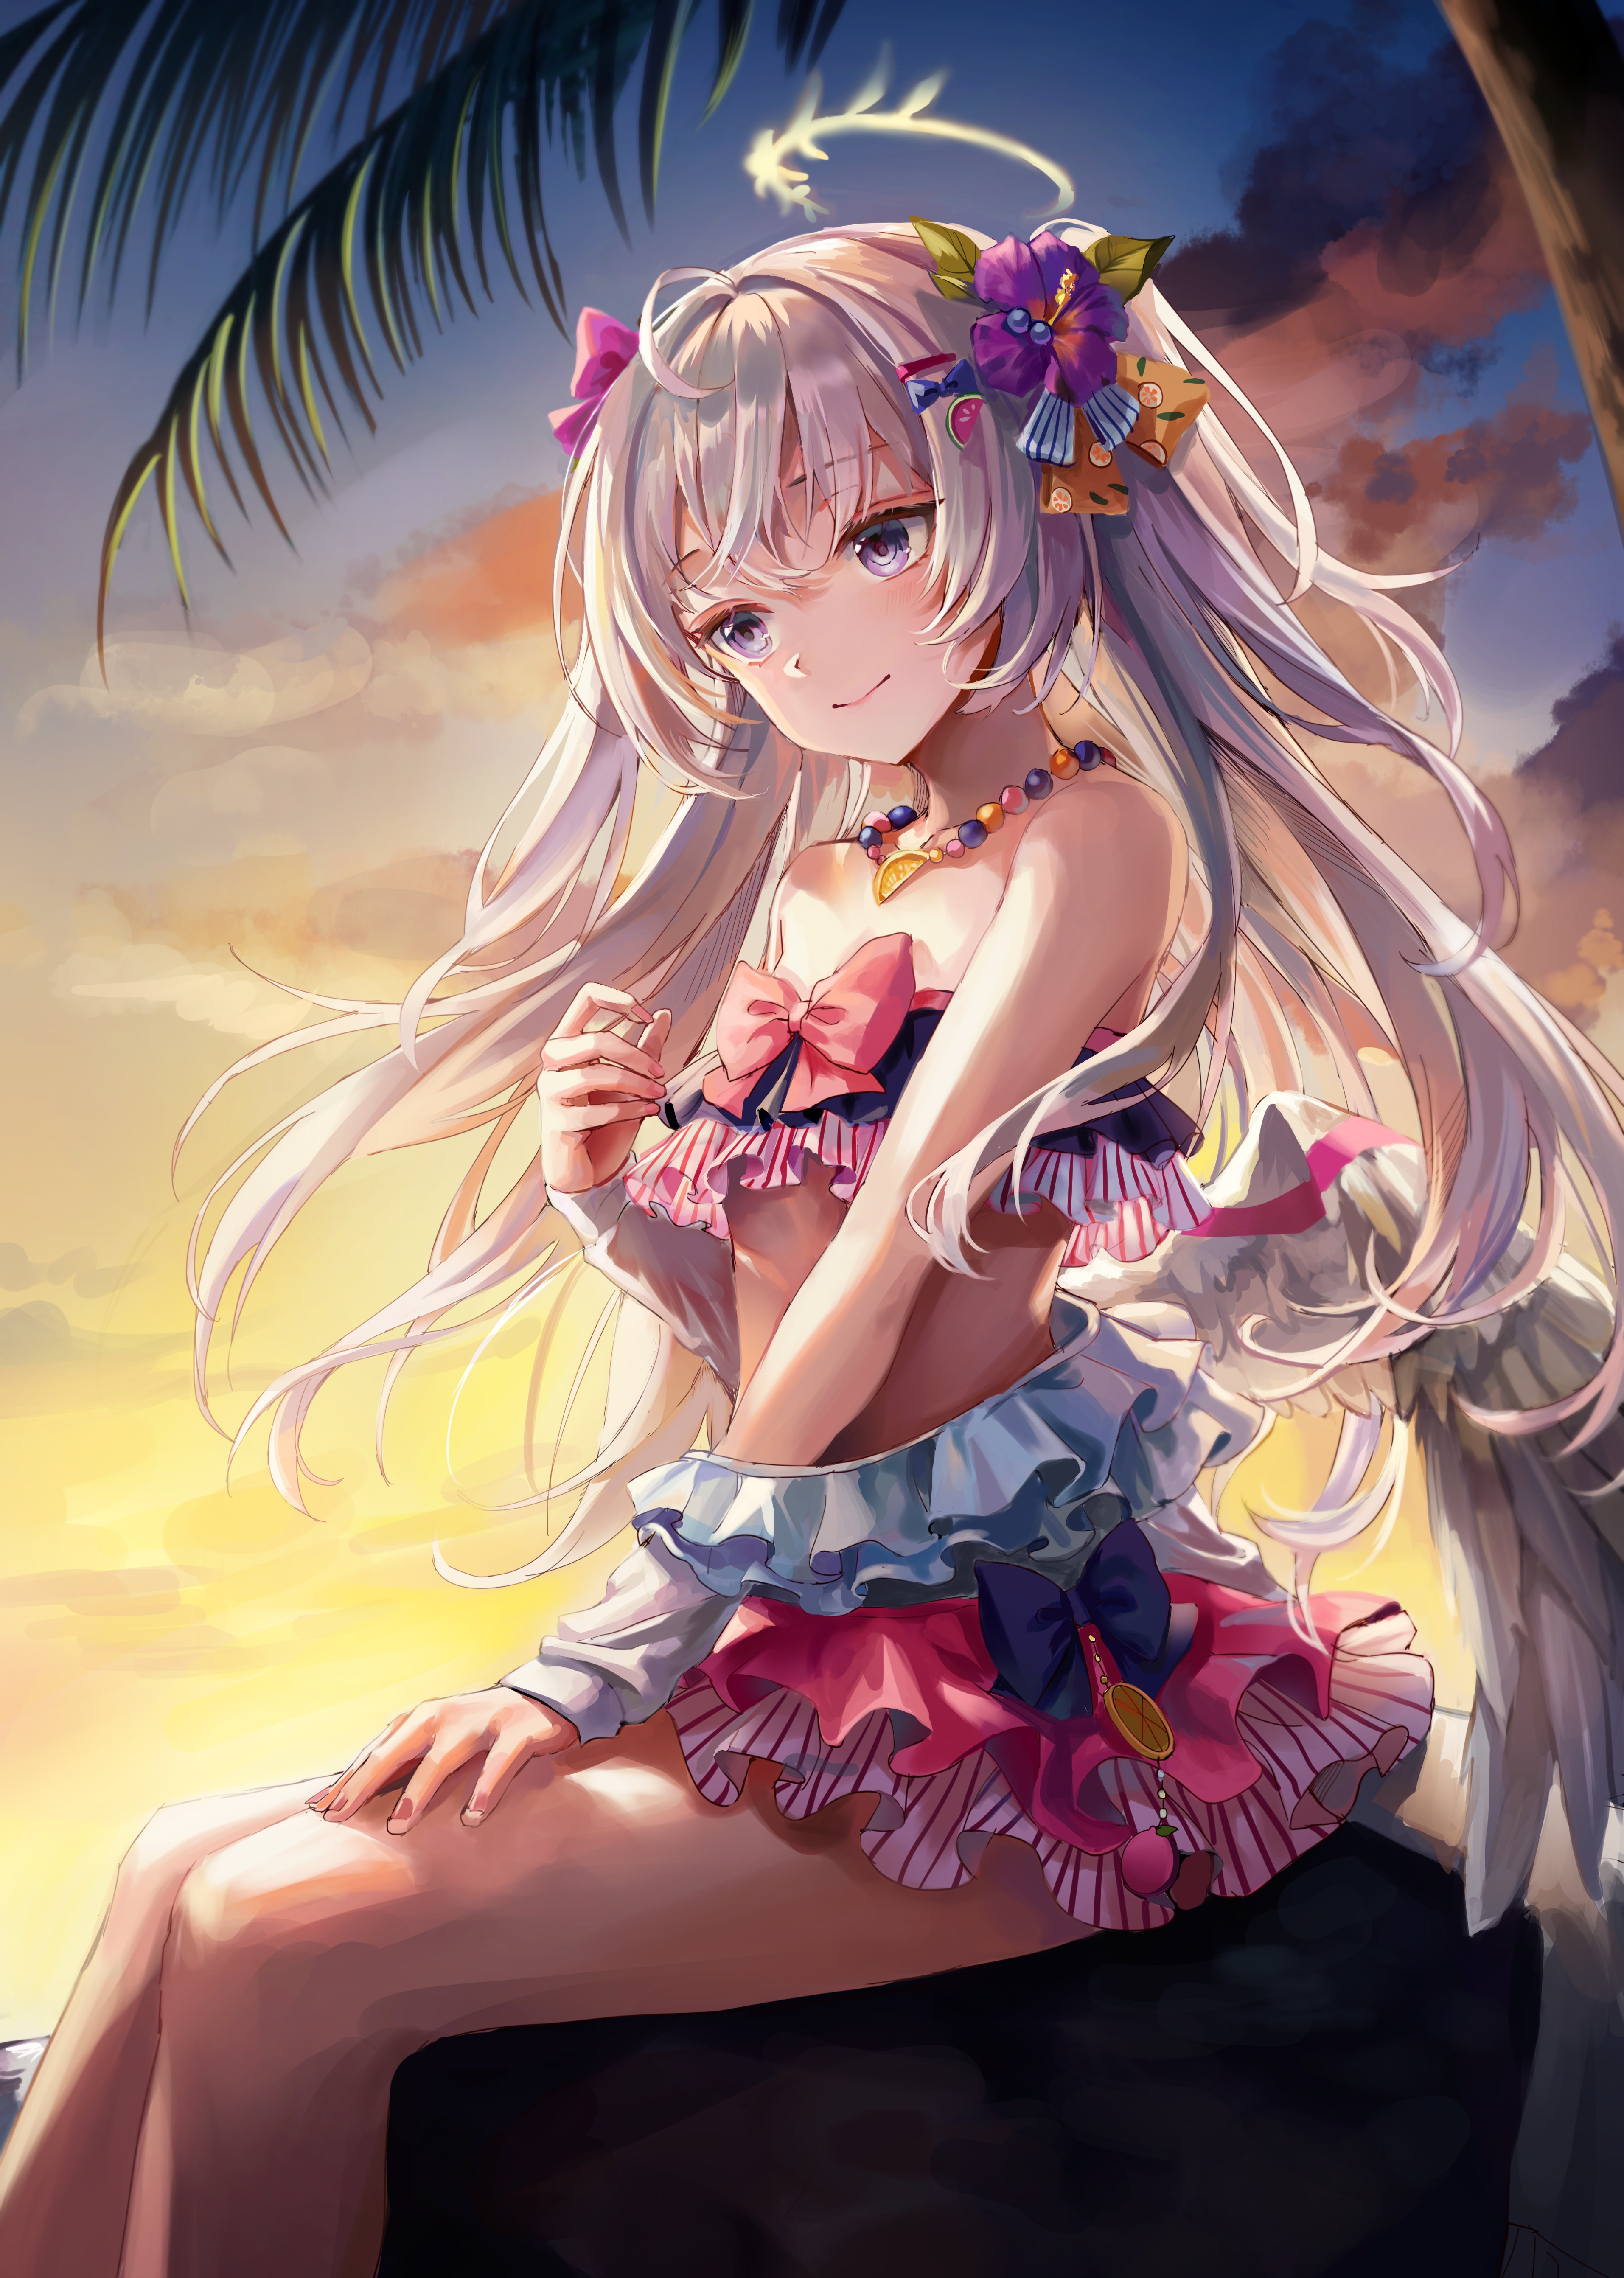 Anime 3827x5368 skirt white hair bikini gray hair sunset glow palm trees hand on leg halo looking away portrait display flower in hair anime girls necklace